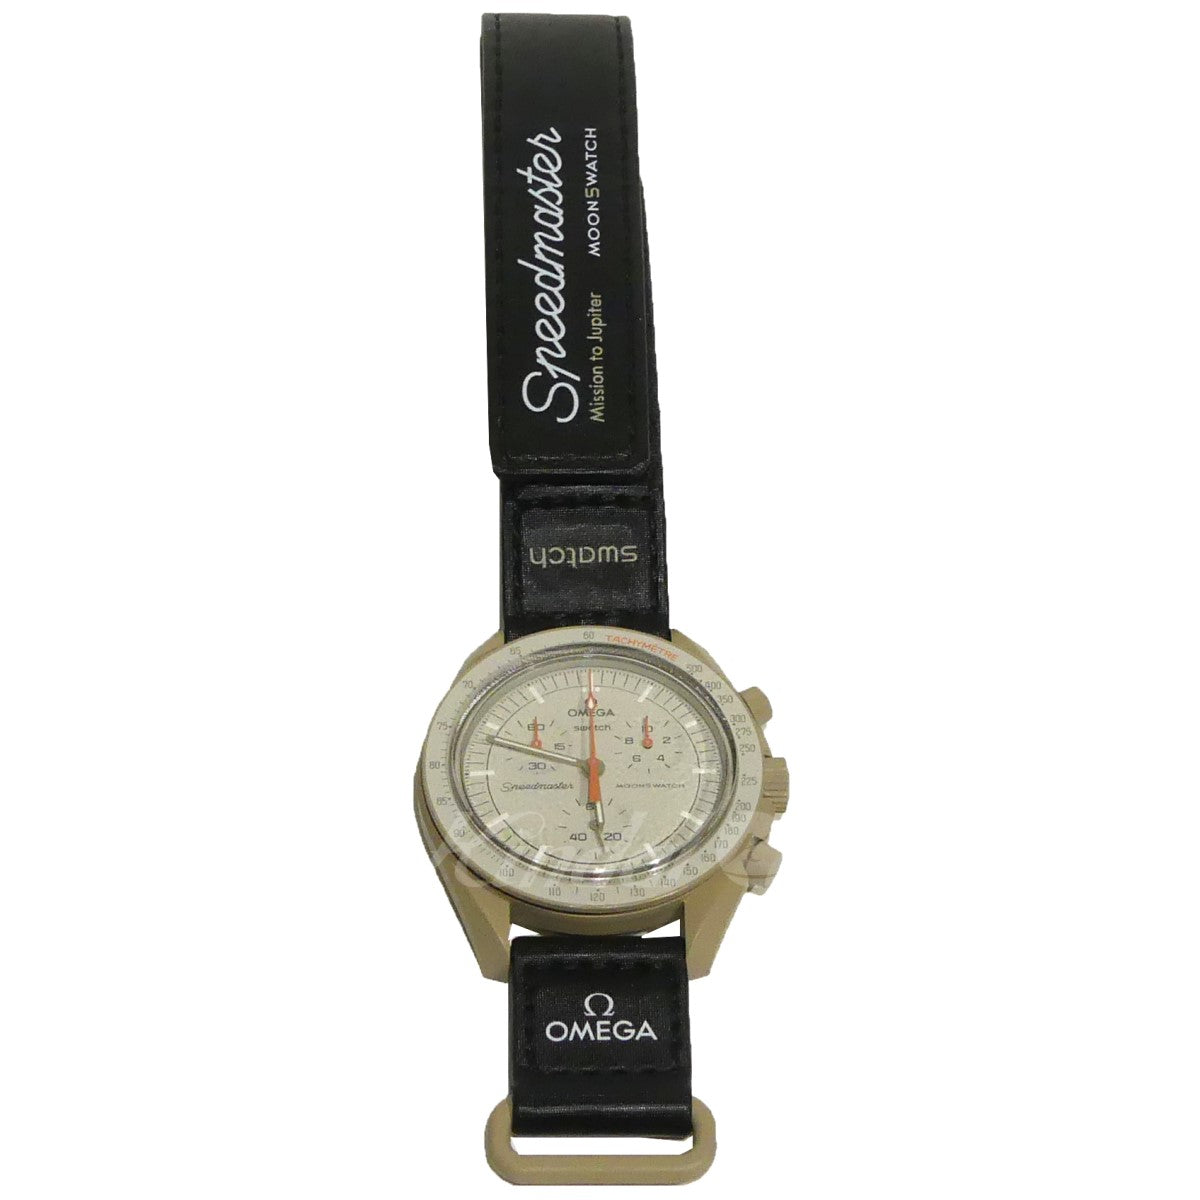 Swatch X Omega(スウォッチ オメガ) BIOCERAMIC MoonSwatch JUPITER ジュピター ムーン スウォッチ 腕時計